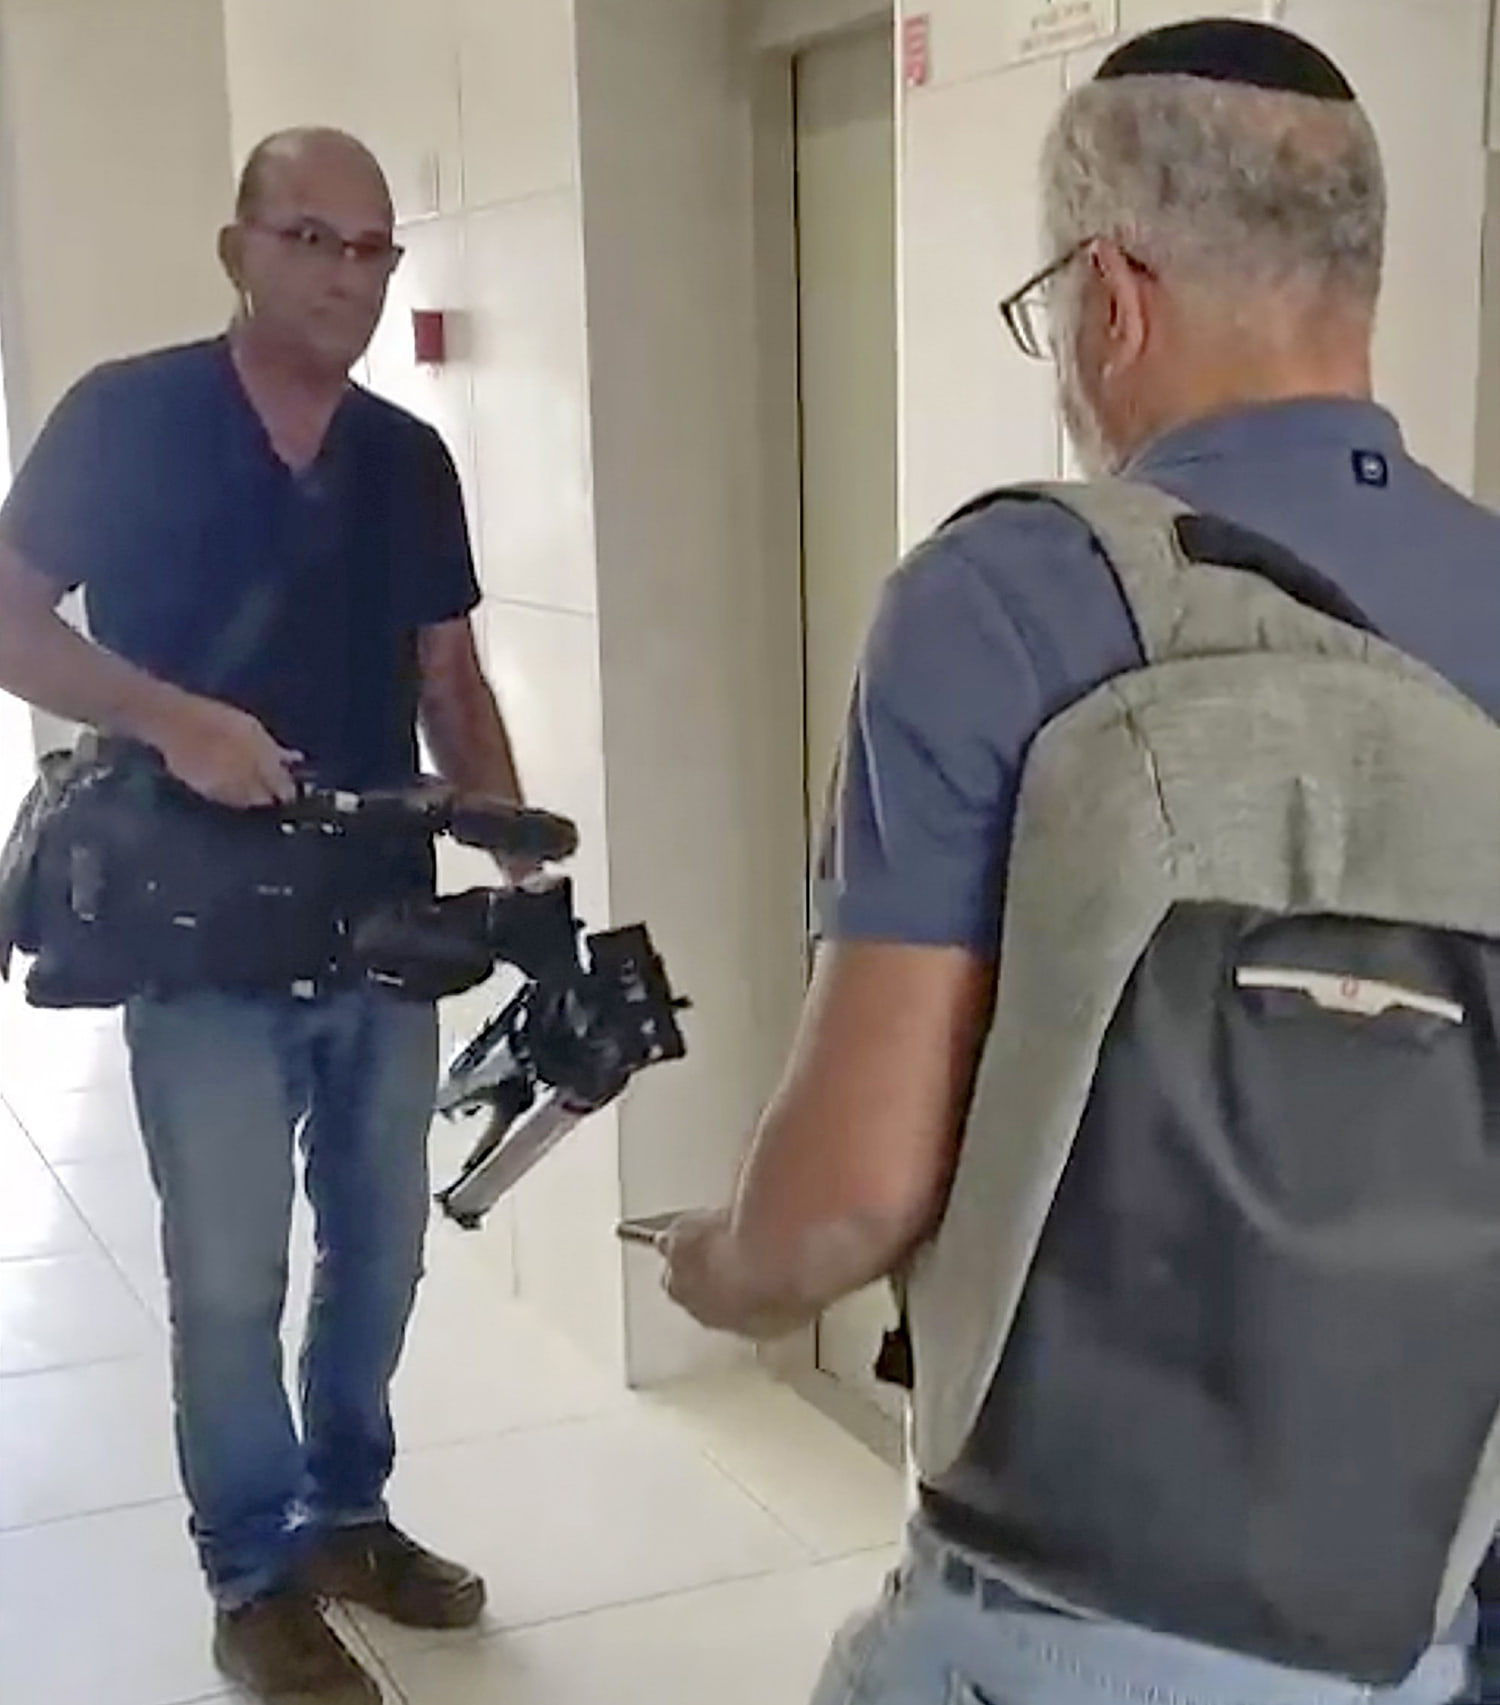 Israeli officials seize Associated Press equipment, citing new media law